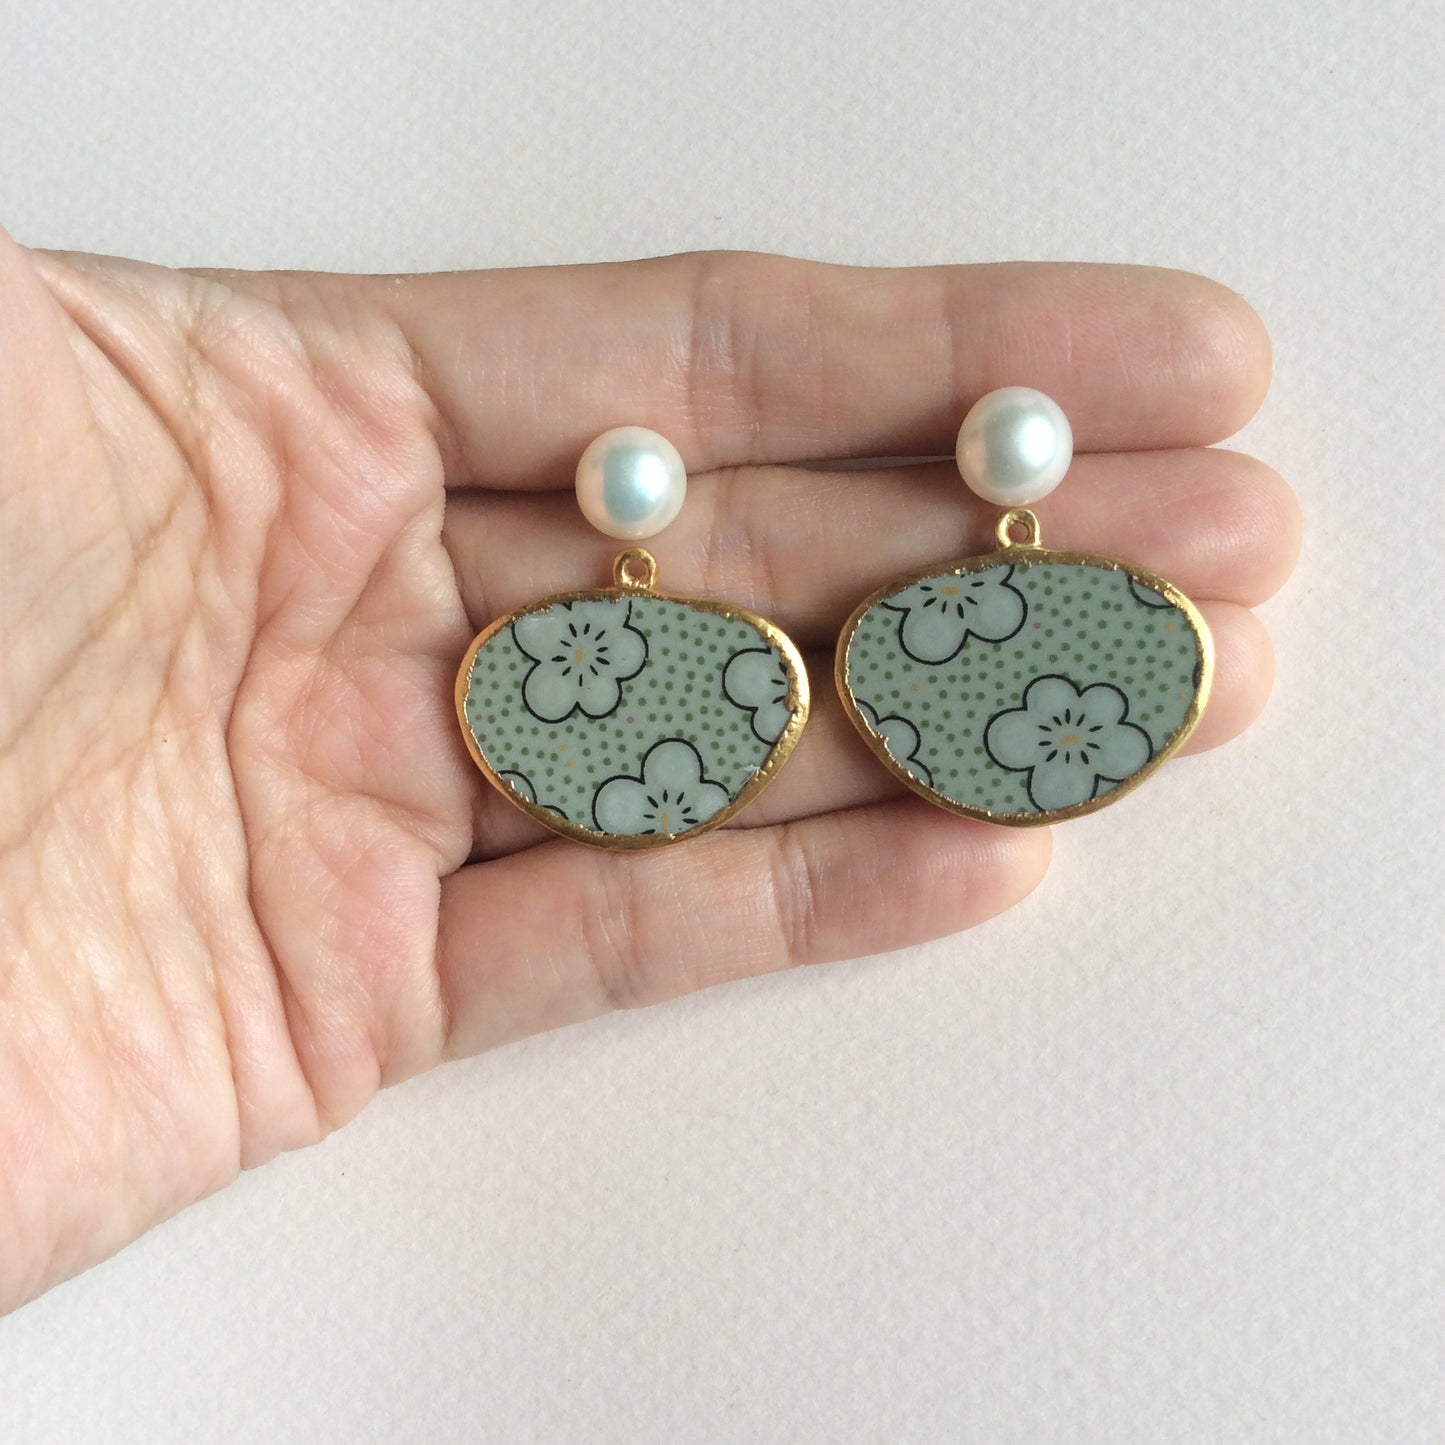 Celadon sakura porcelain earrings with freshwater pearl studs